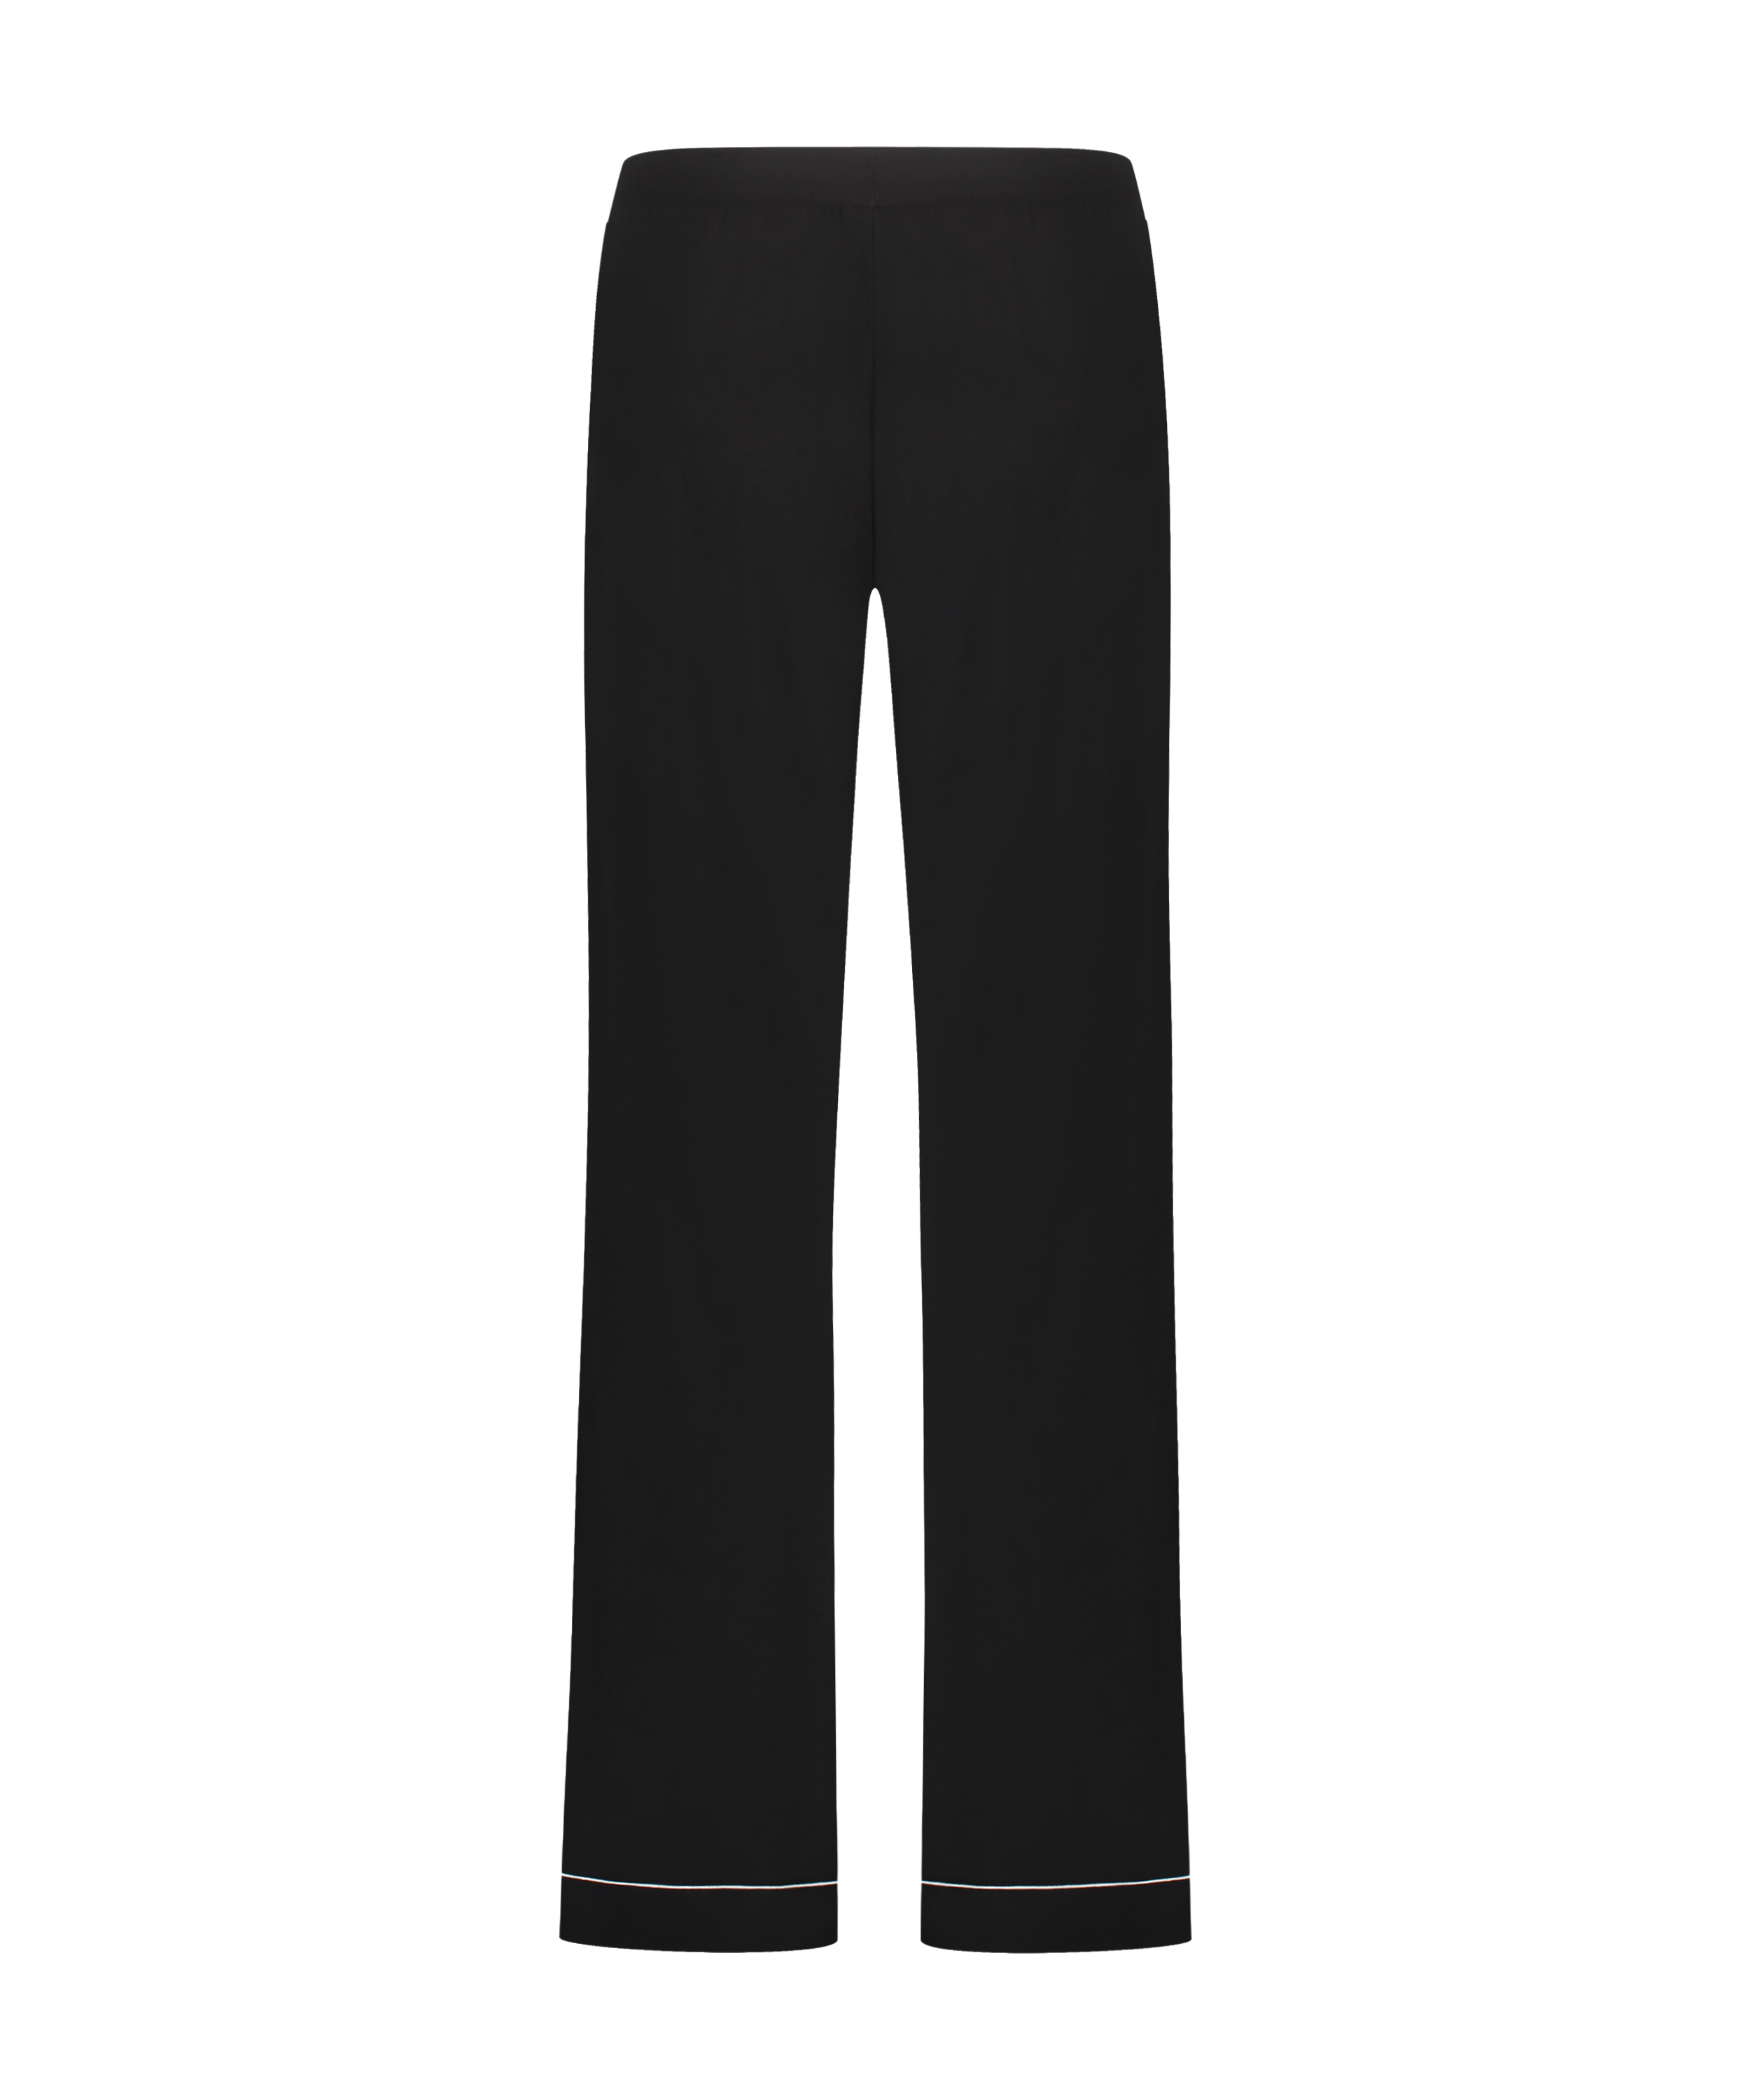 Essential Jersey Pants, Black, main